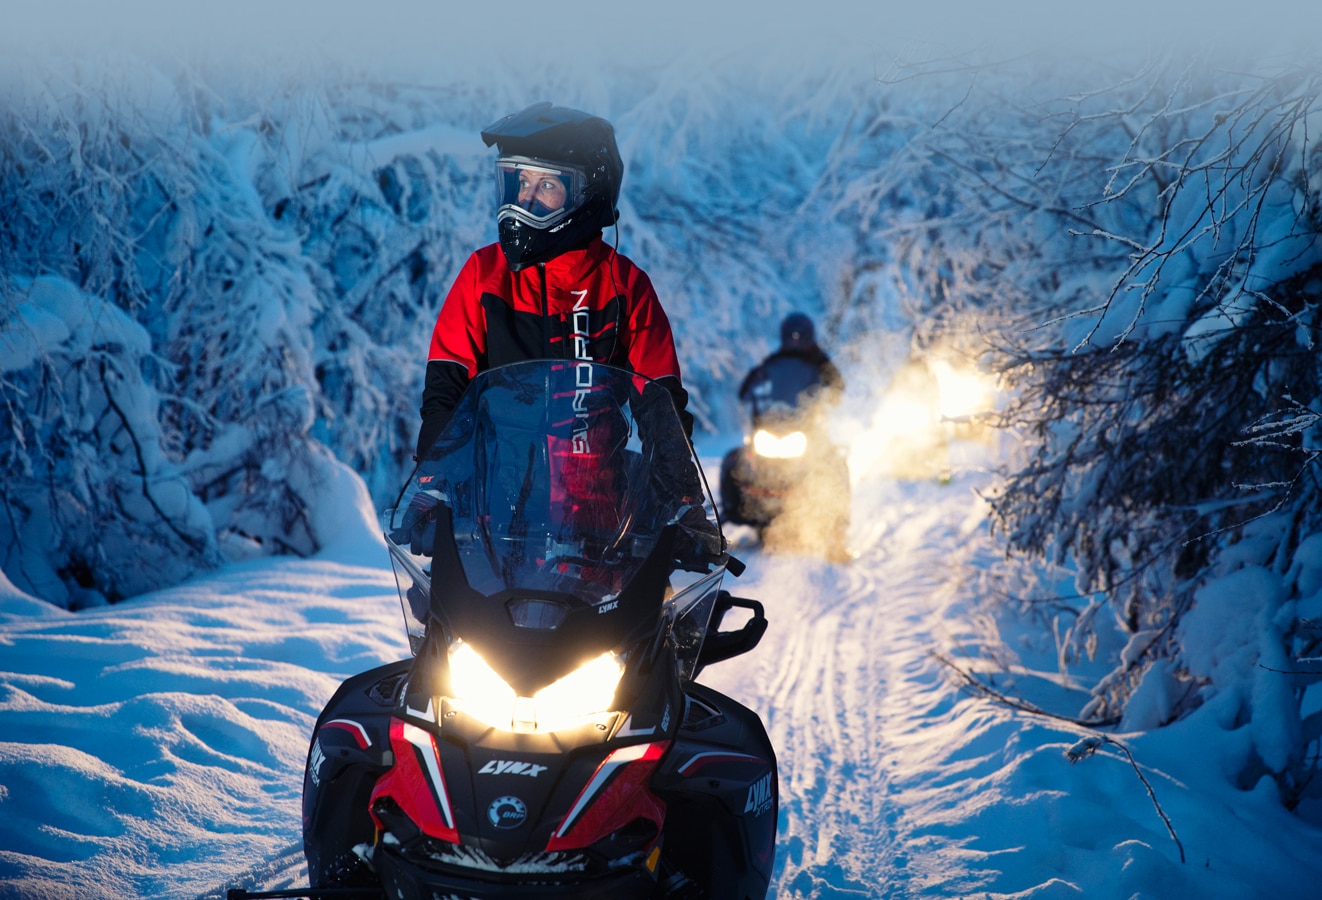 Grupa vozača prati snježni put u šumi sa svojim modelom motornih sanki Lynx Xtrim